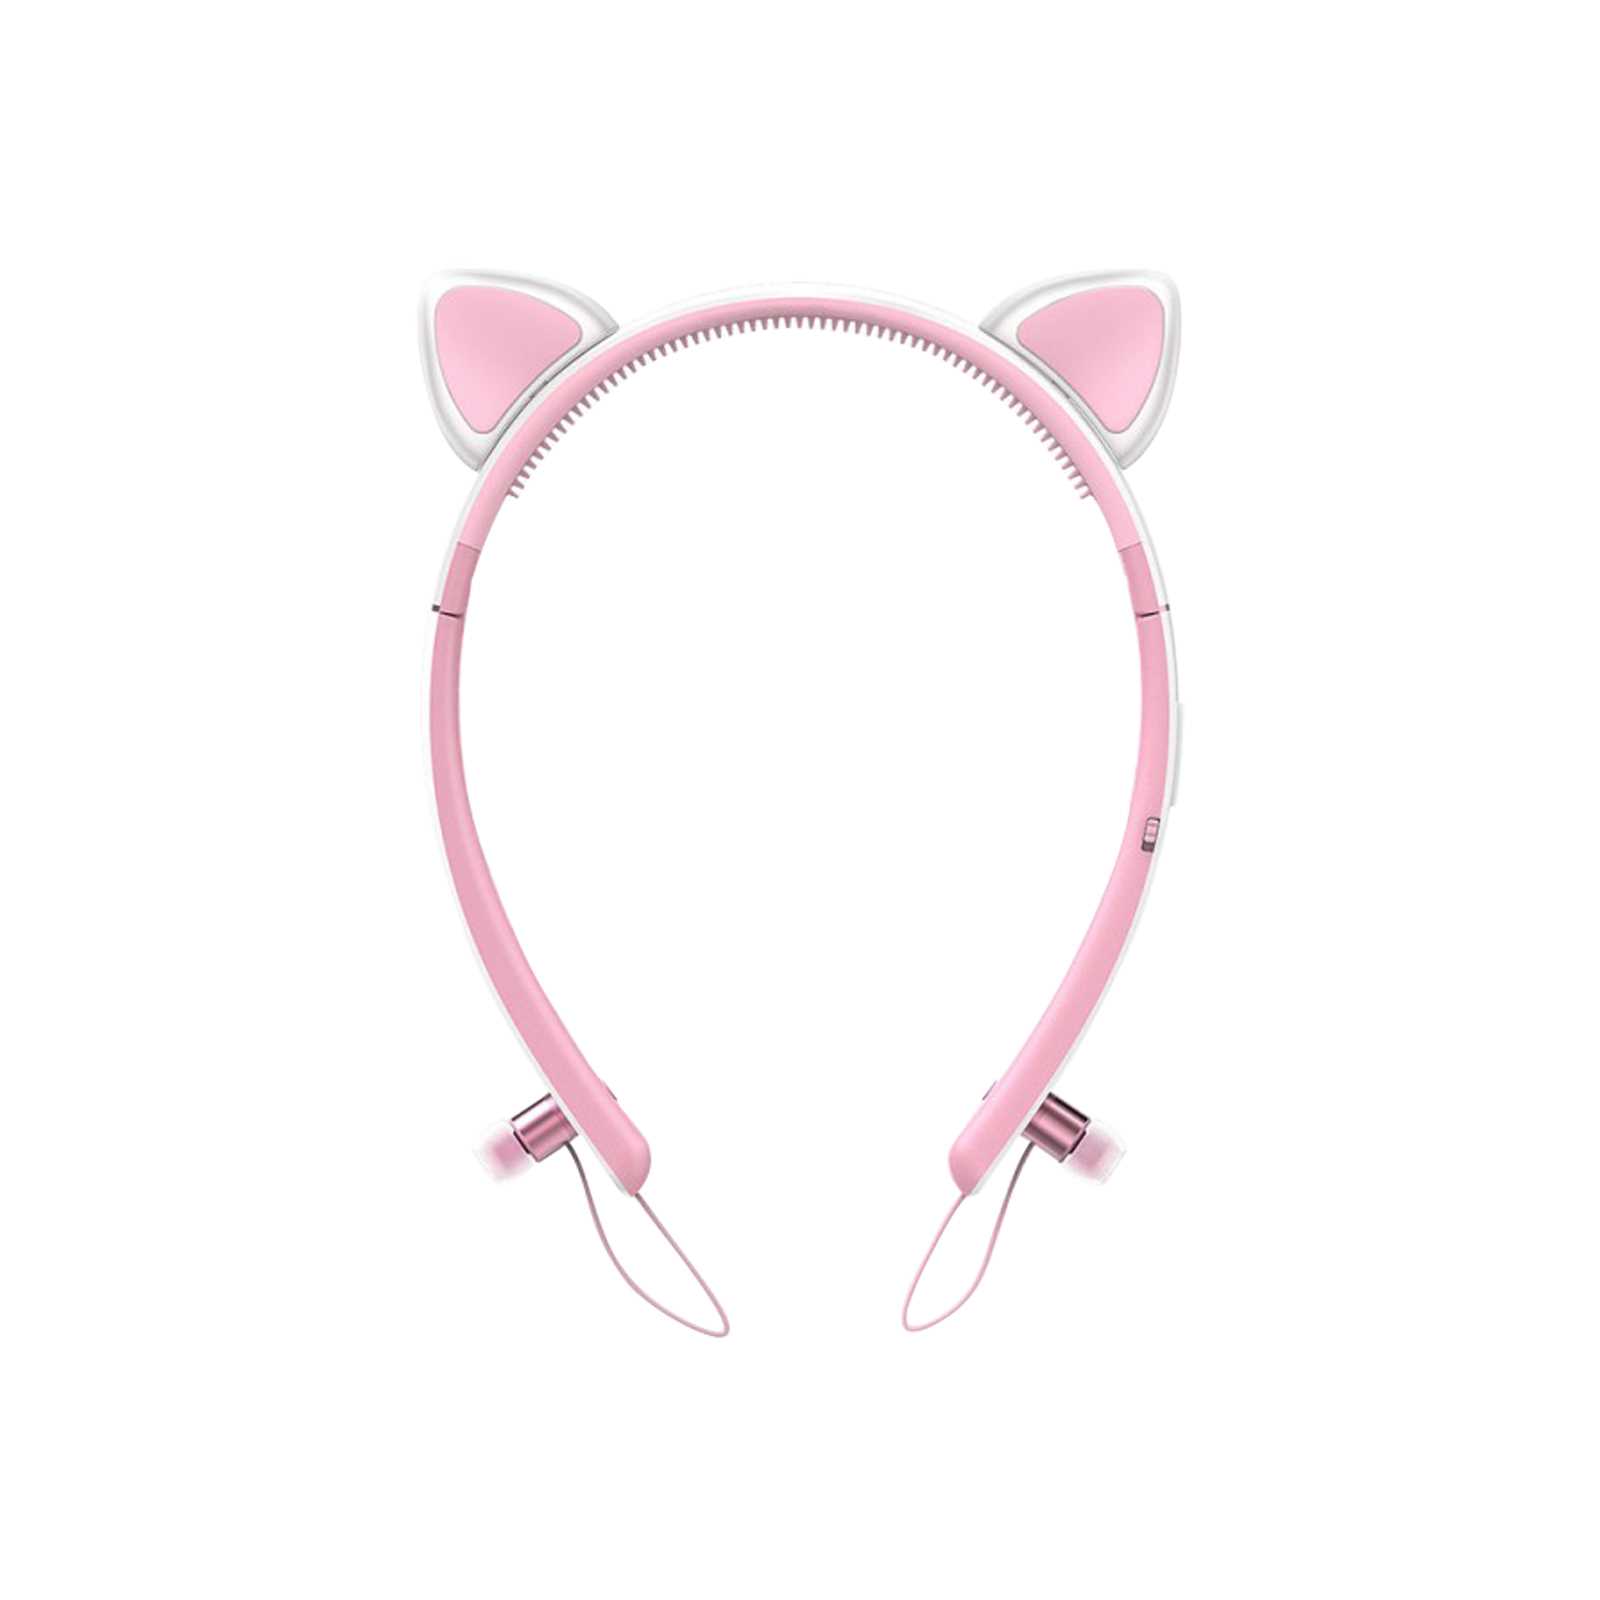 Tronsmart Bunny Ears Bluetooth Headphones